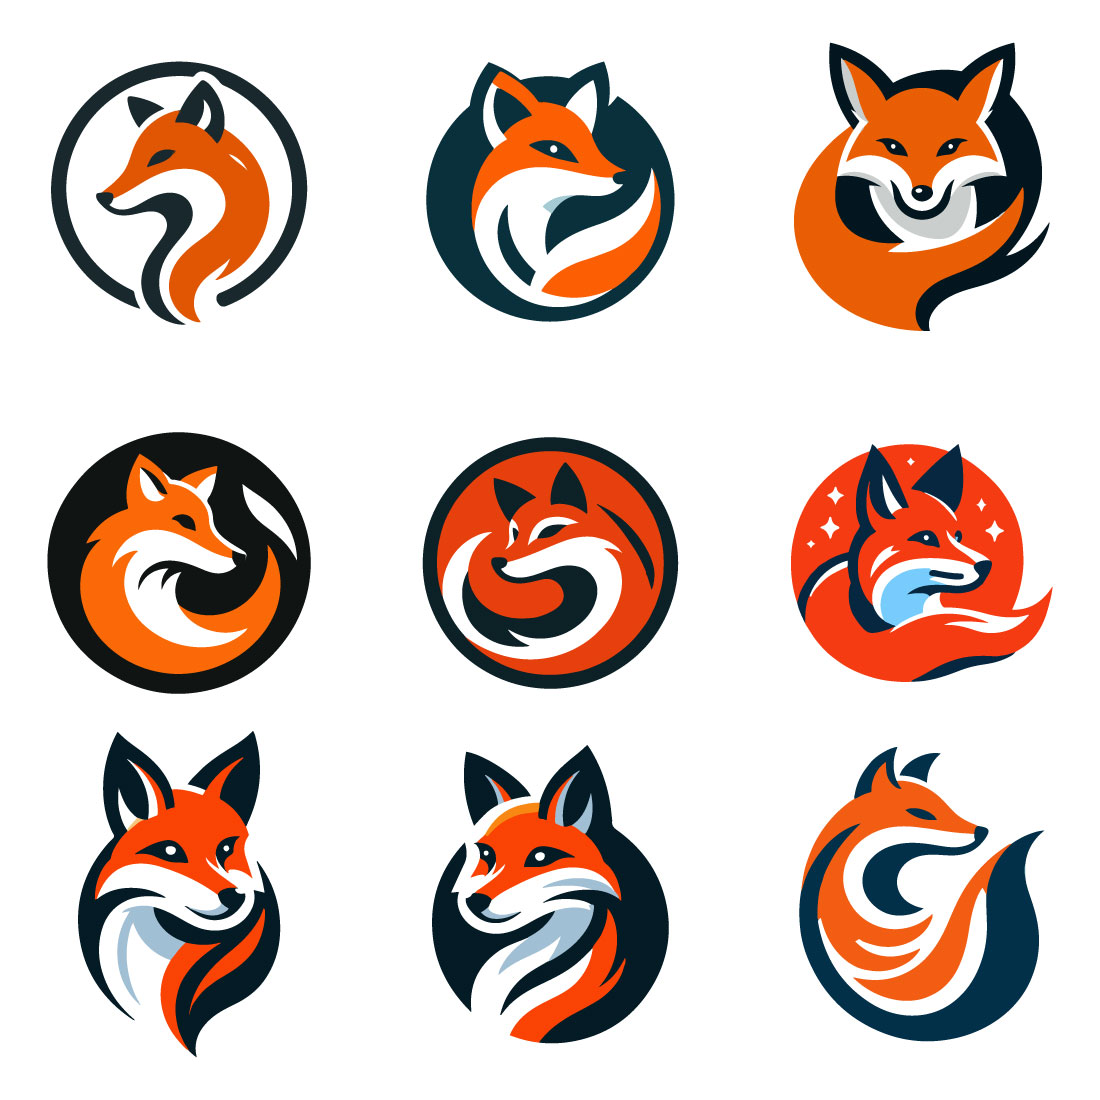 9 Fox Logos Vector Illustration cover image.